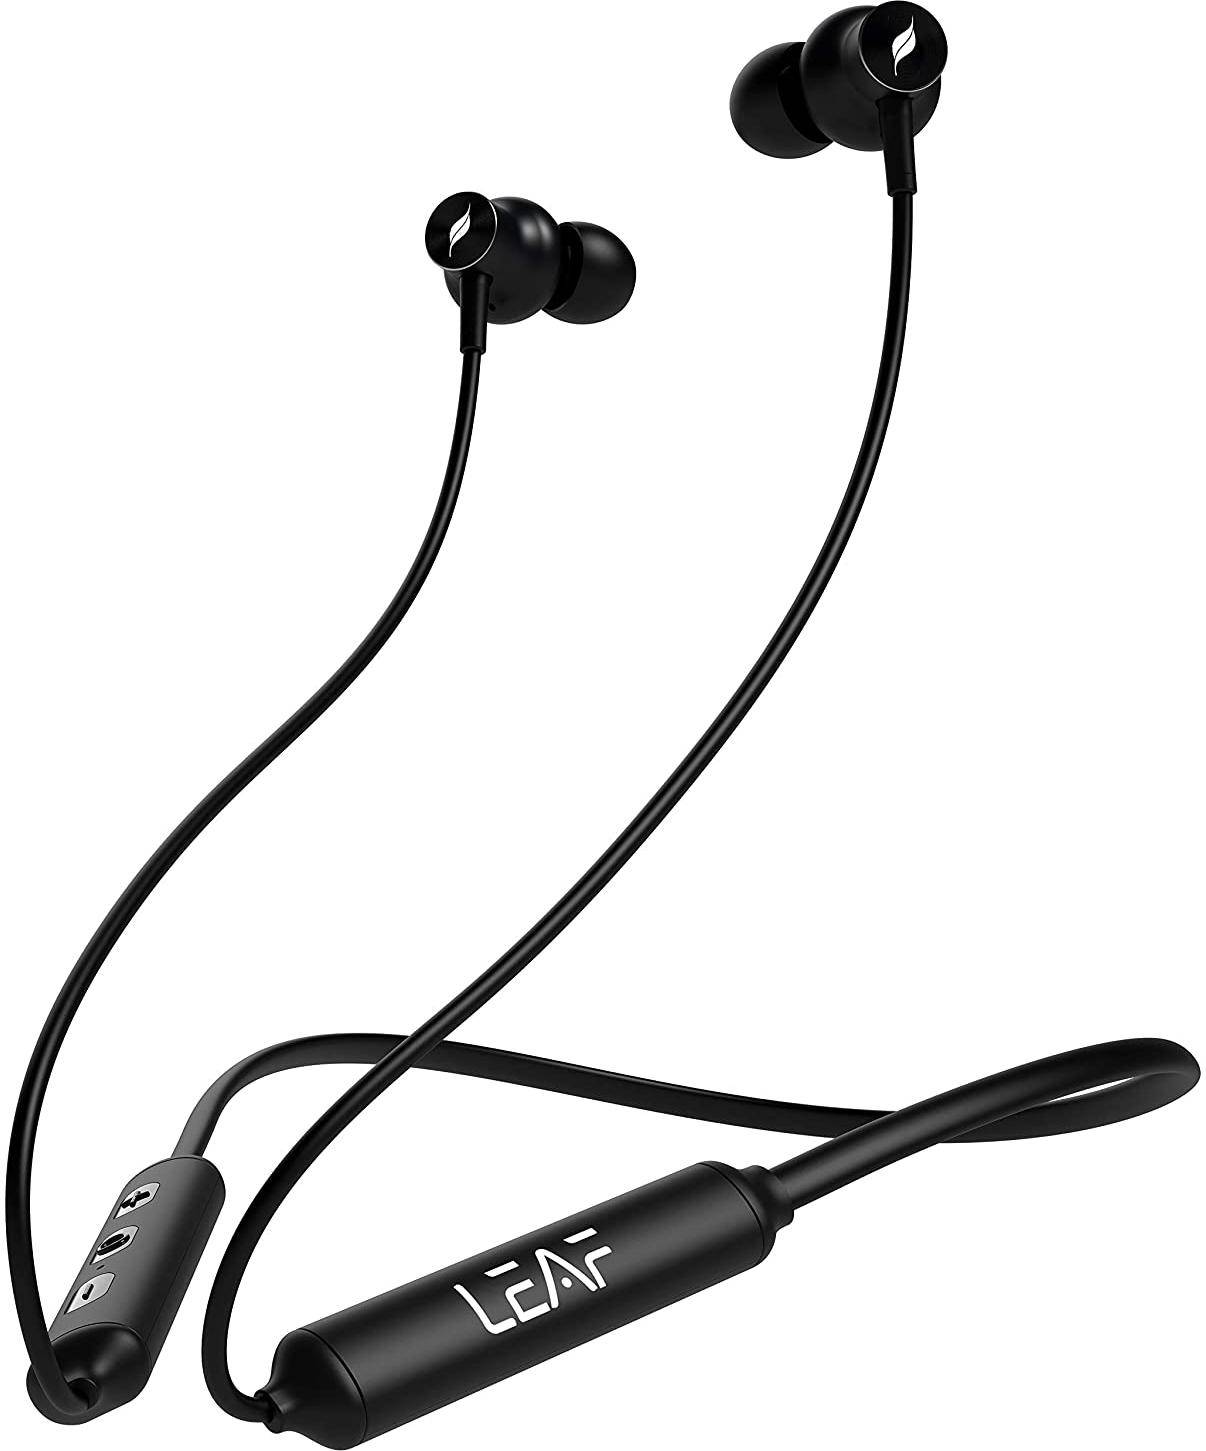 Leaf Flex Wireless Neckband Earphones With Microphone zoom image